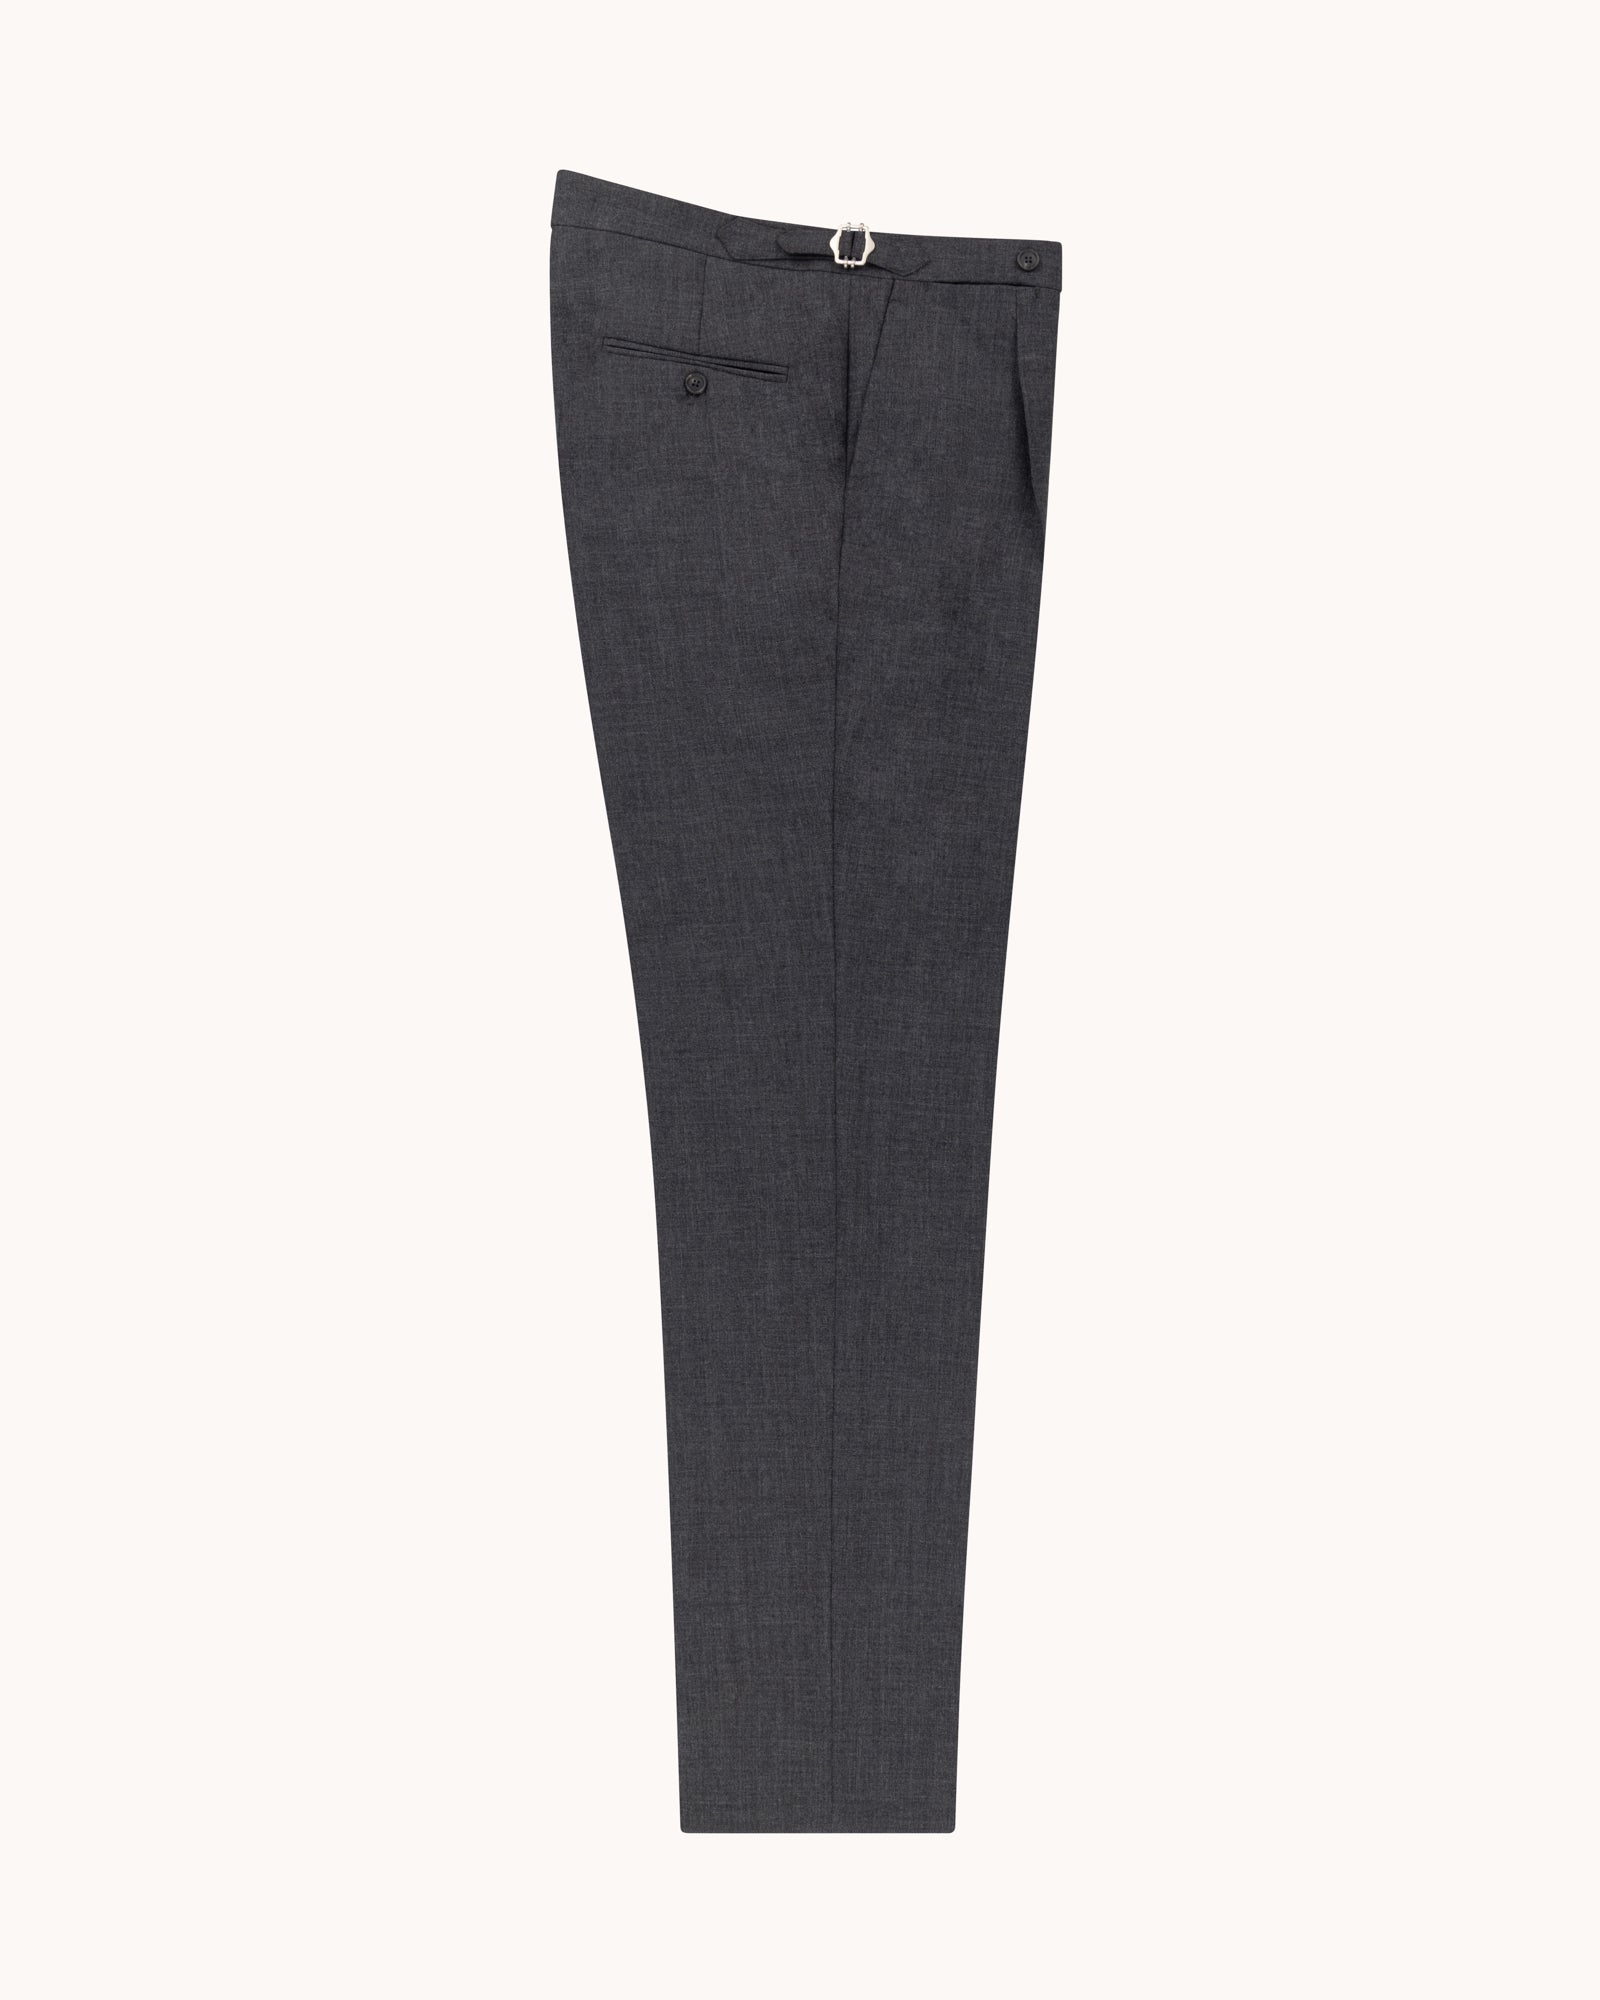 Single Pleat Trouser - Charcoal Tropical Wool